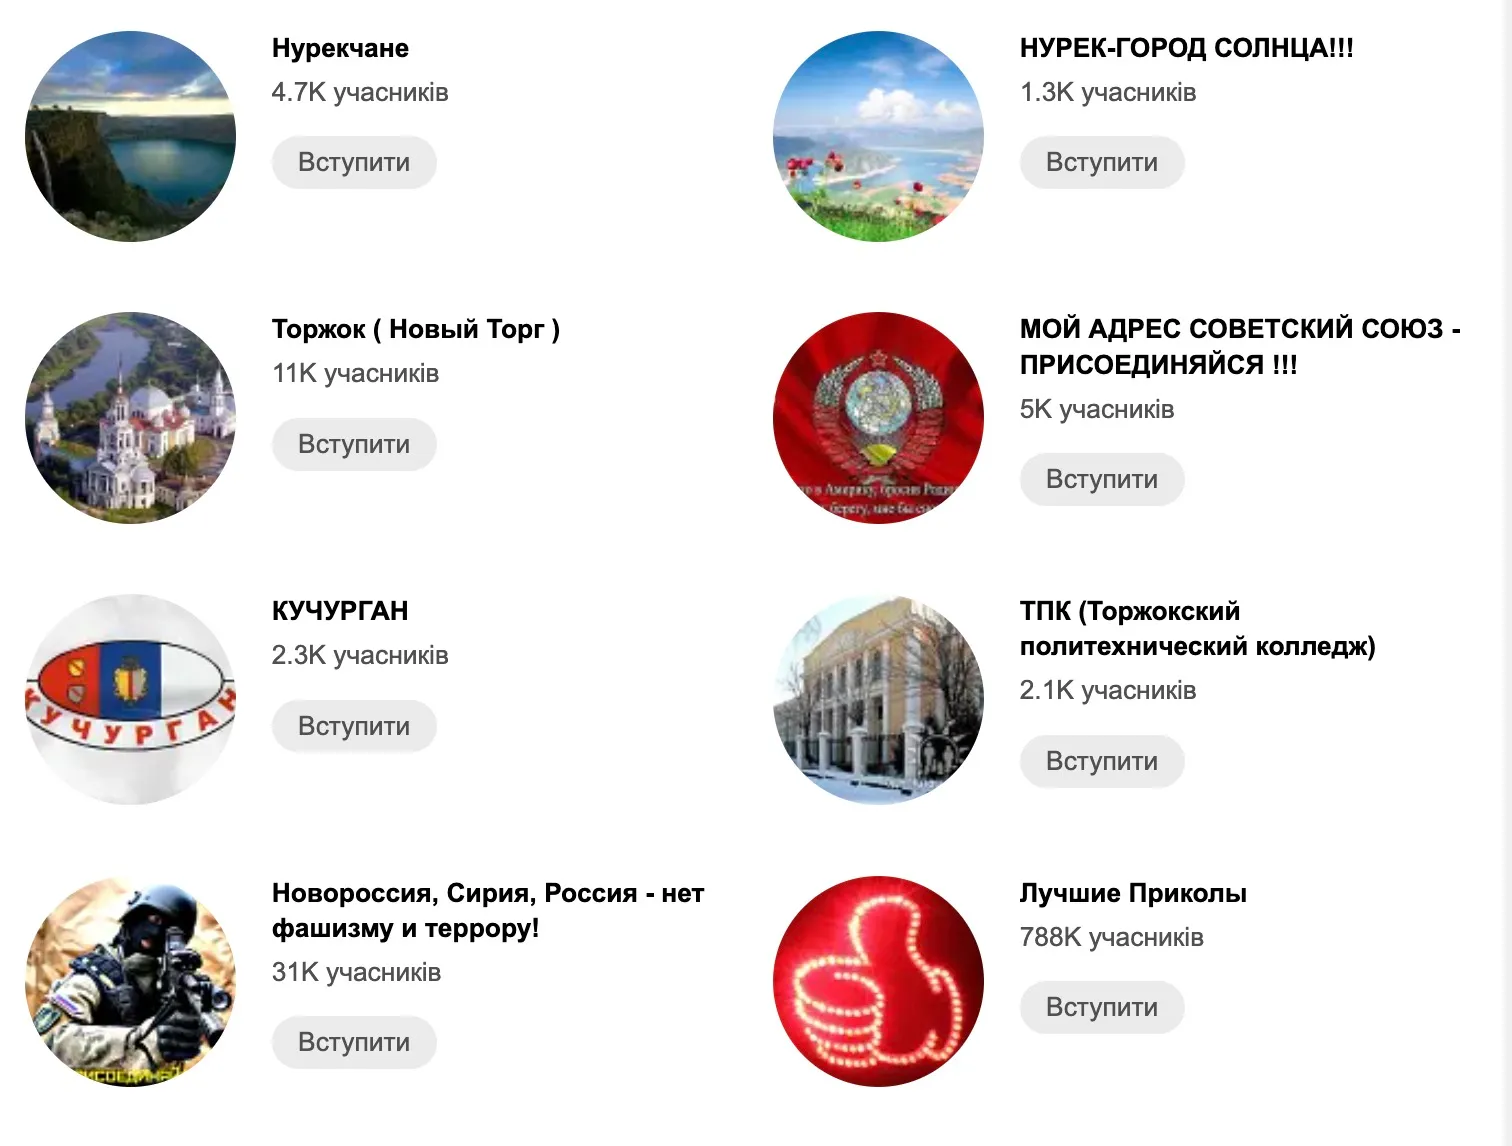 Пророссийские группы, на которые подписан Александр Матякин